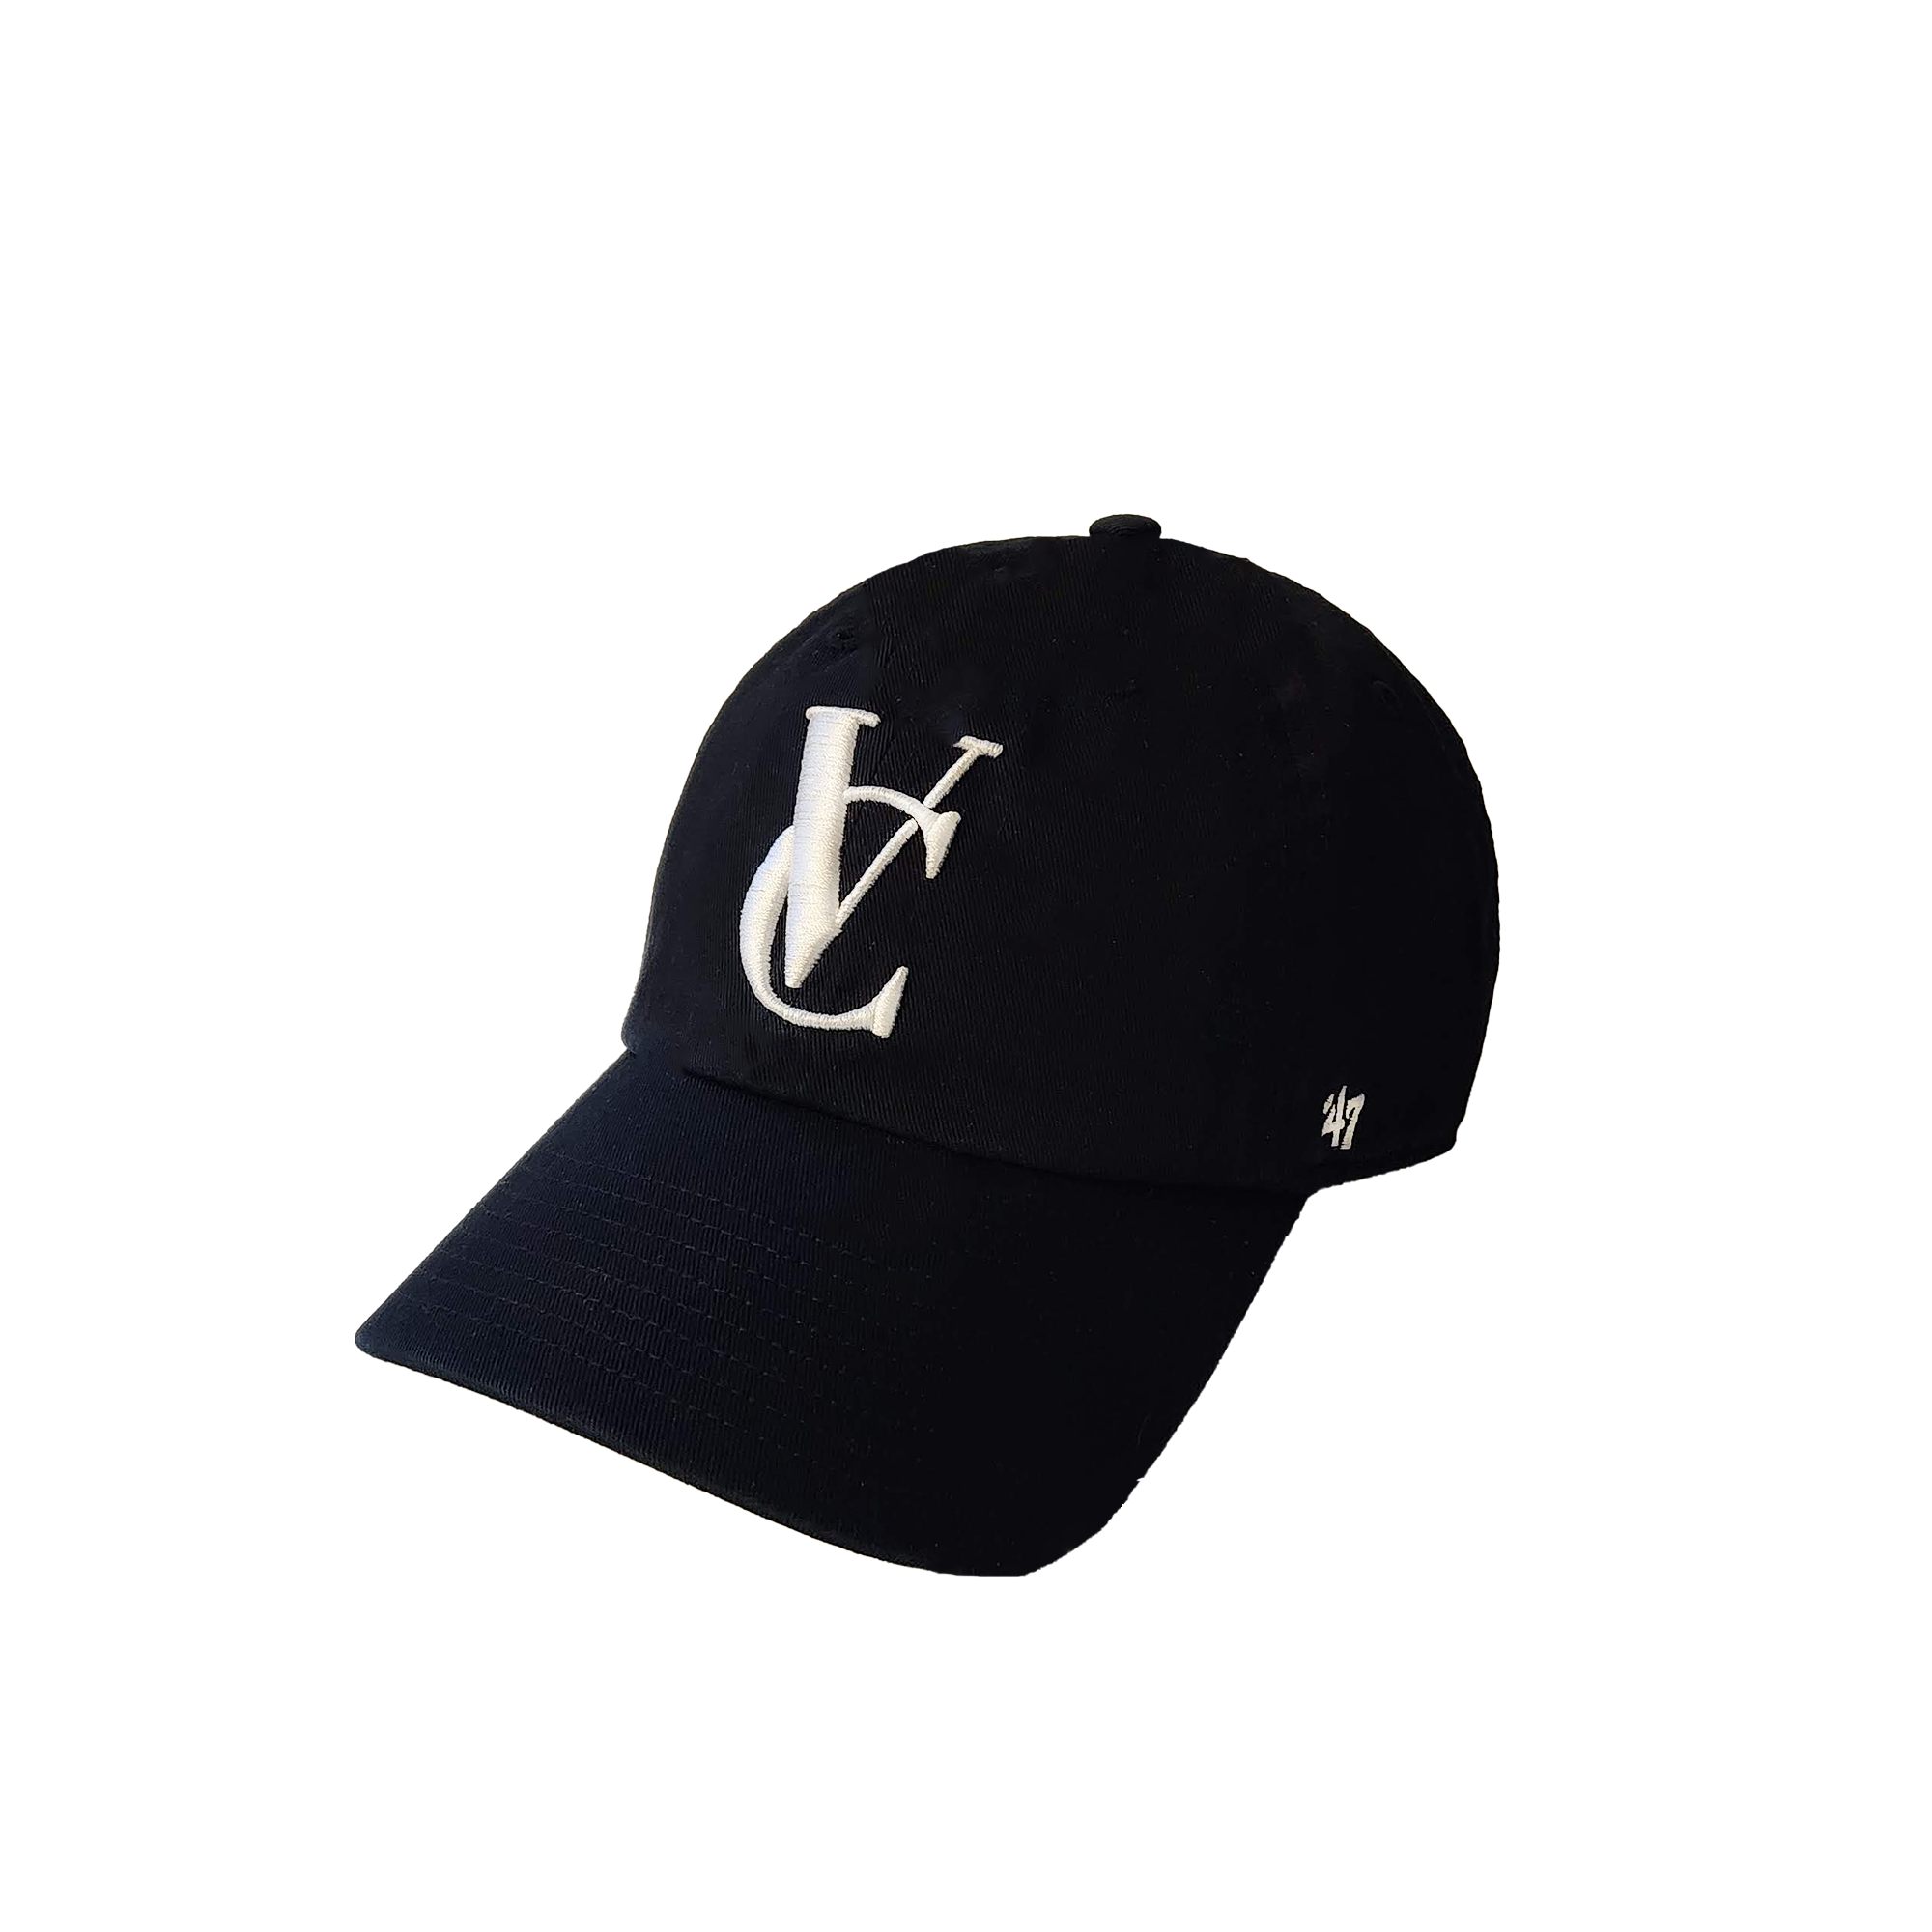 THE ICONIC VC BASEBALL CAP